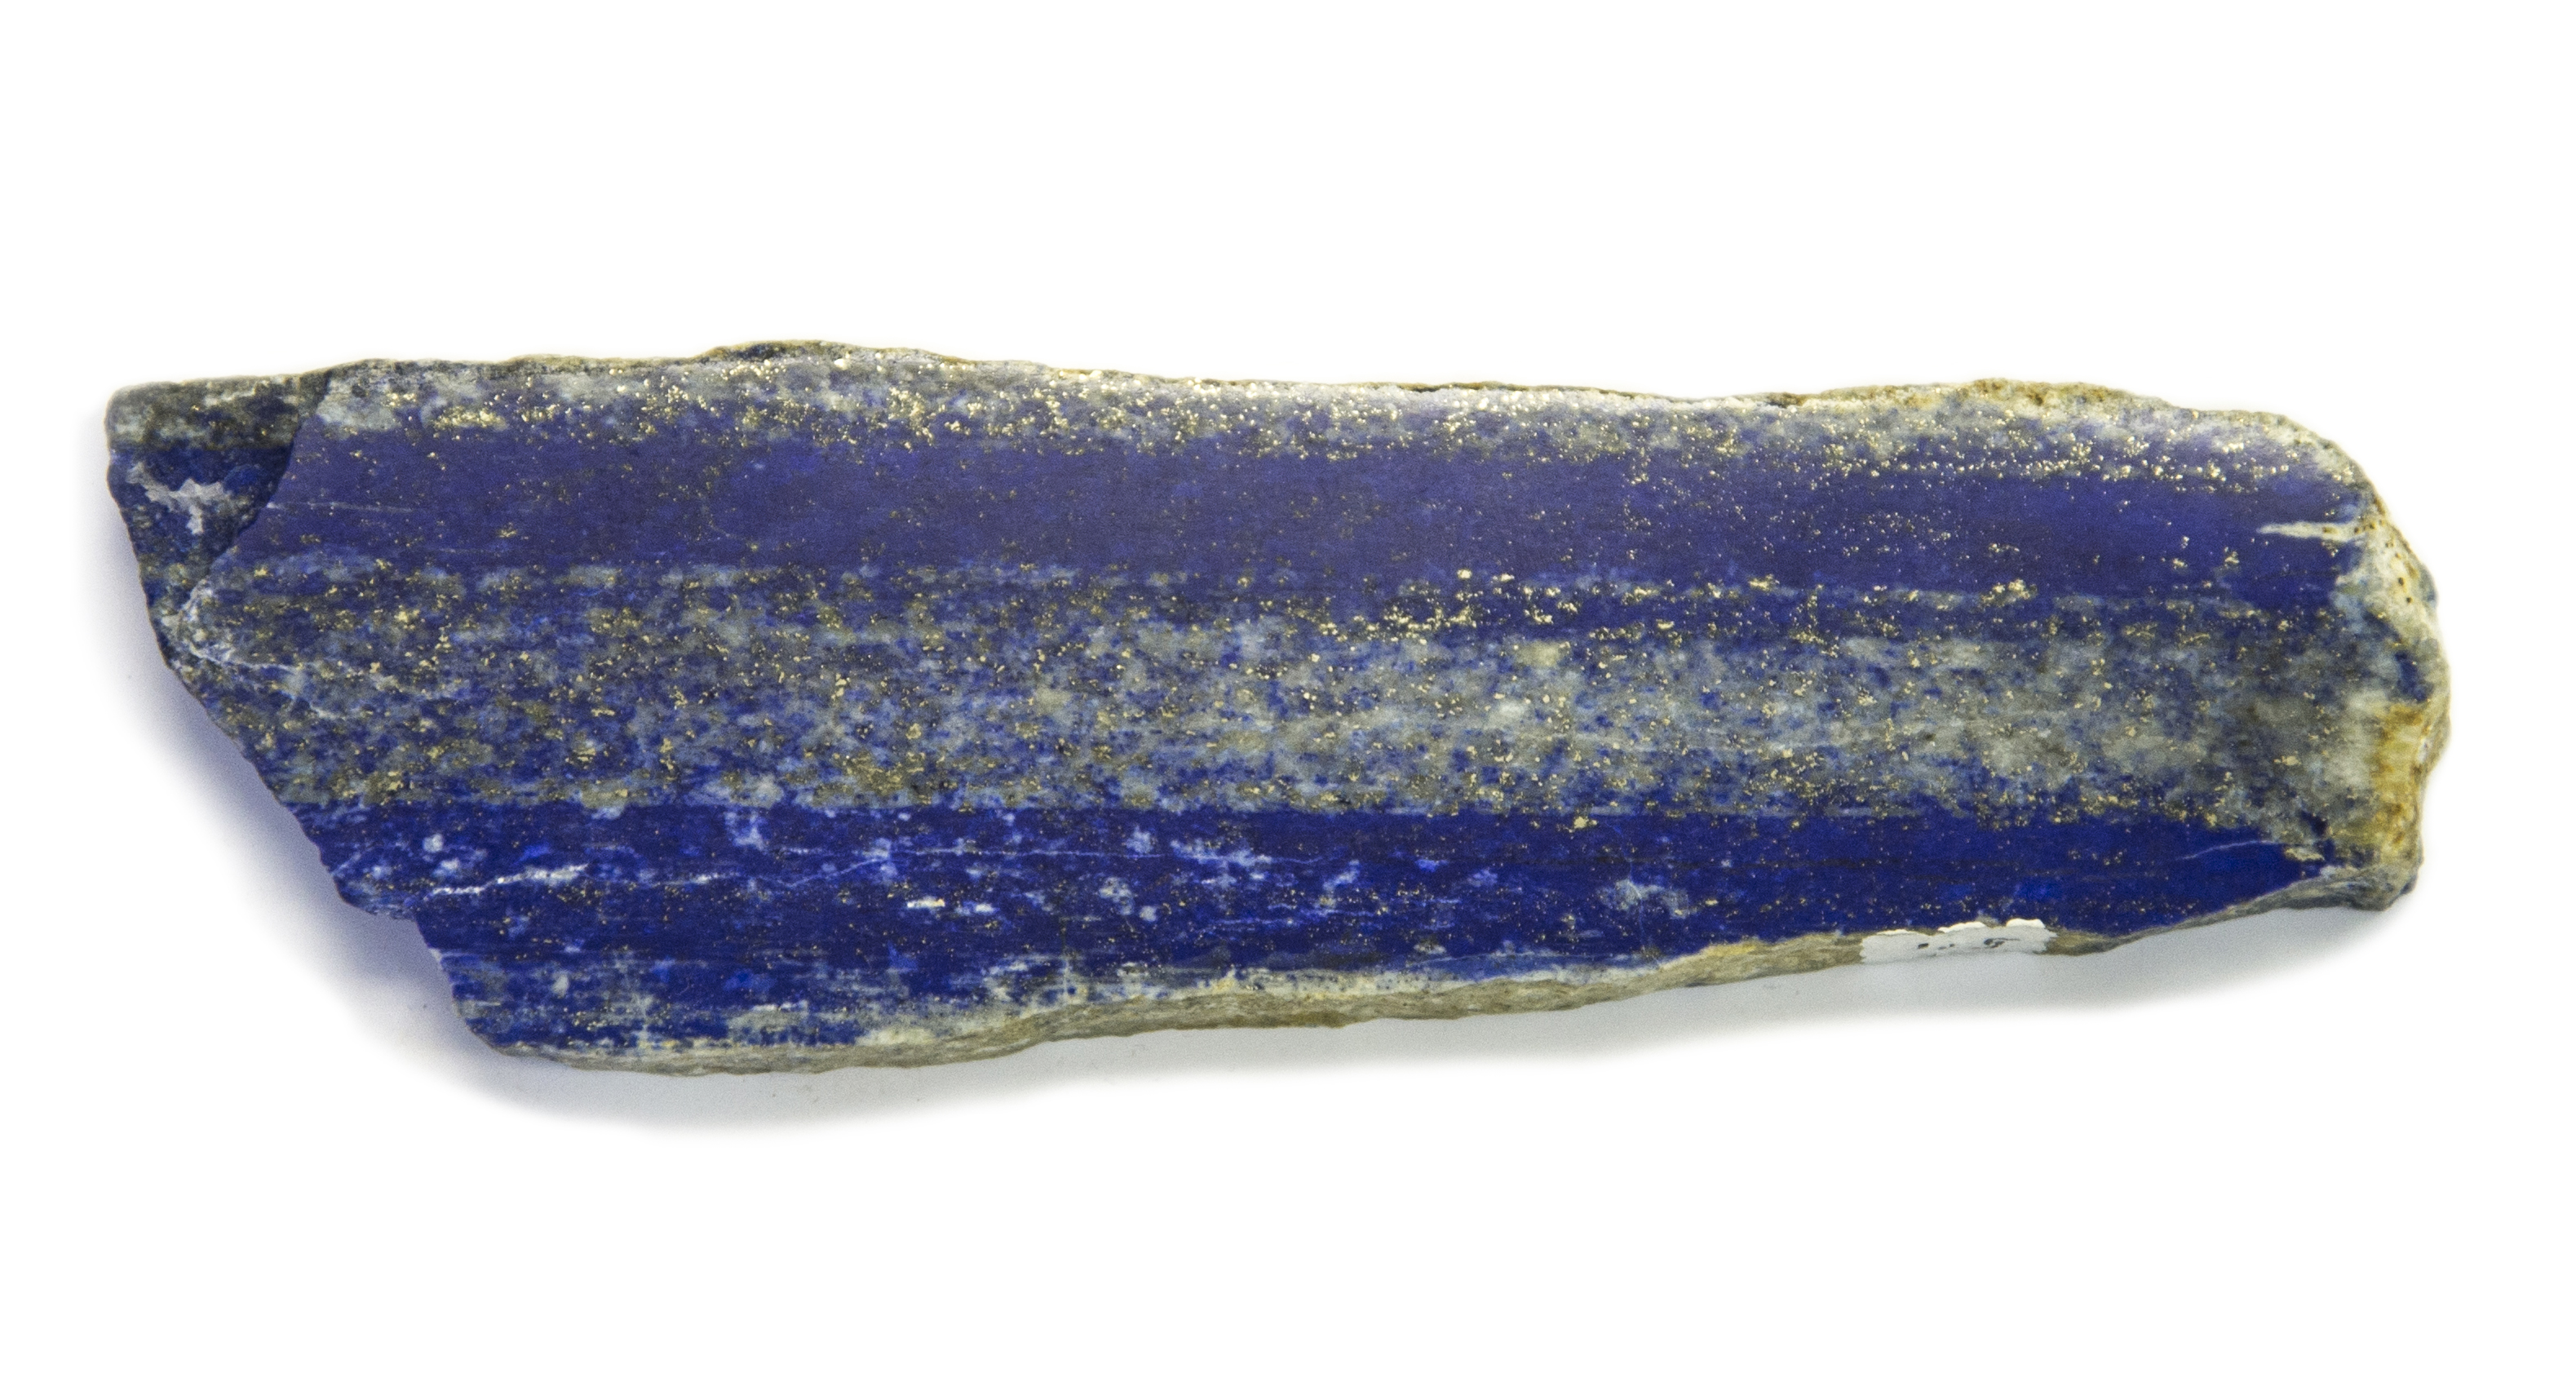 Lapis lazuli (plavi mramor, lazurit)